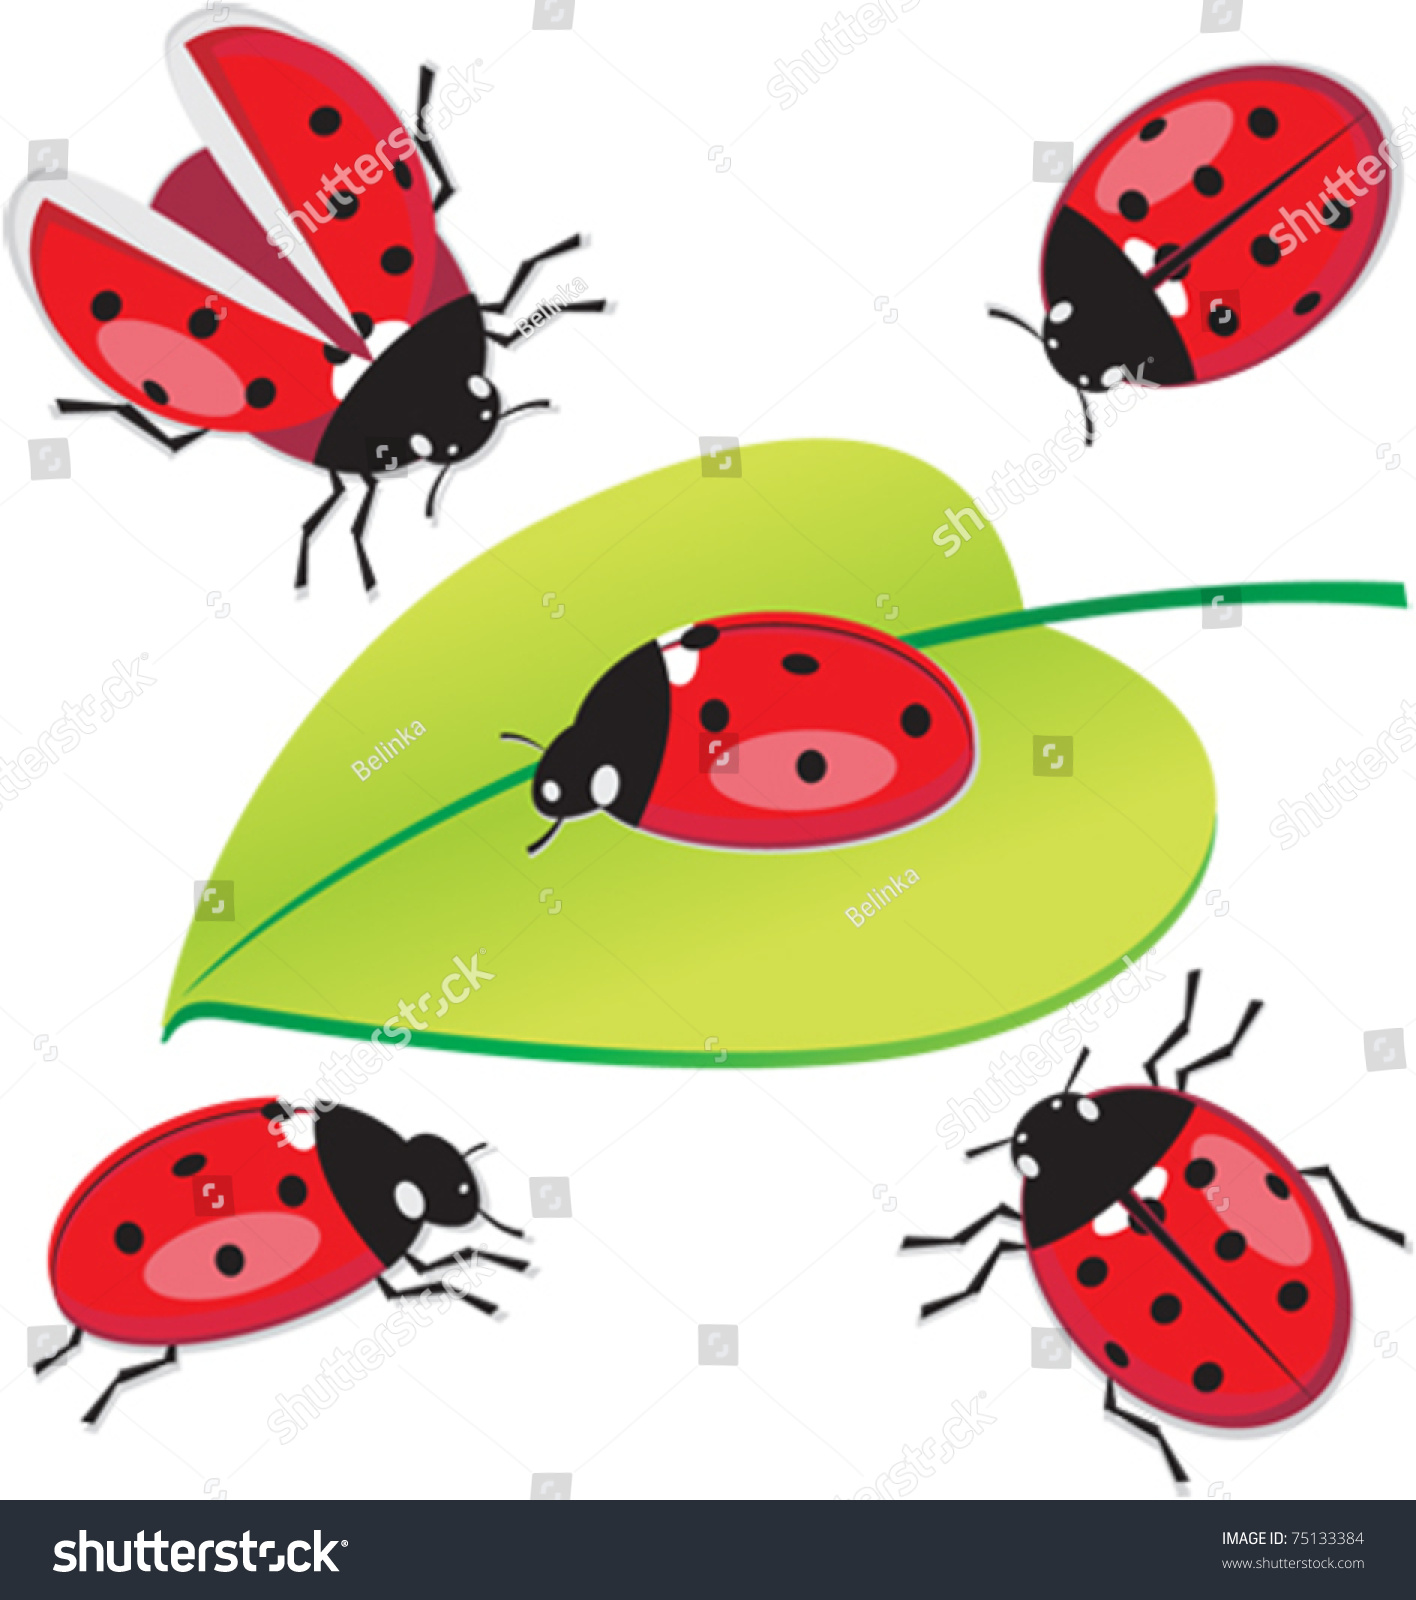 Vector Set Of 5 Ladybug - 75133384 : Shutterstock